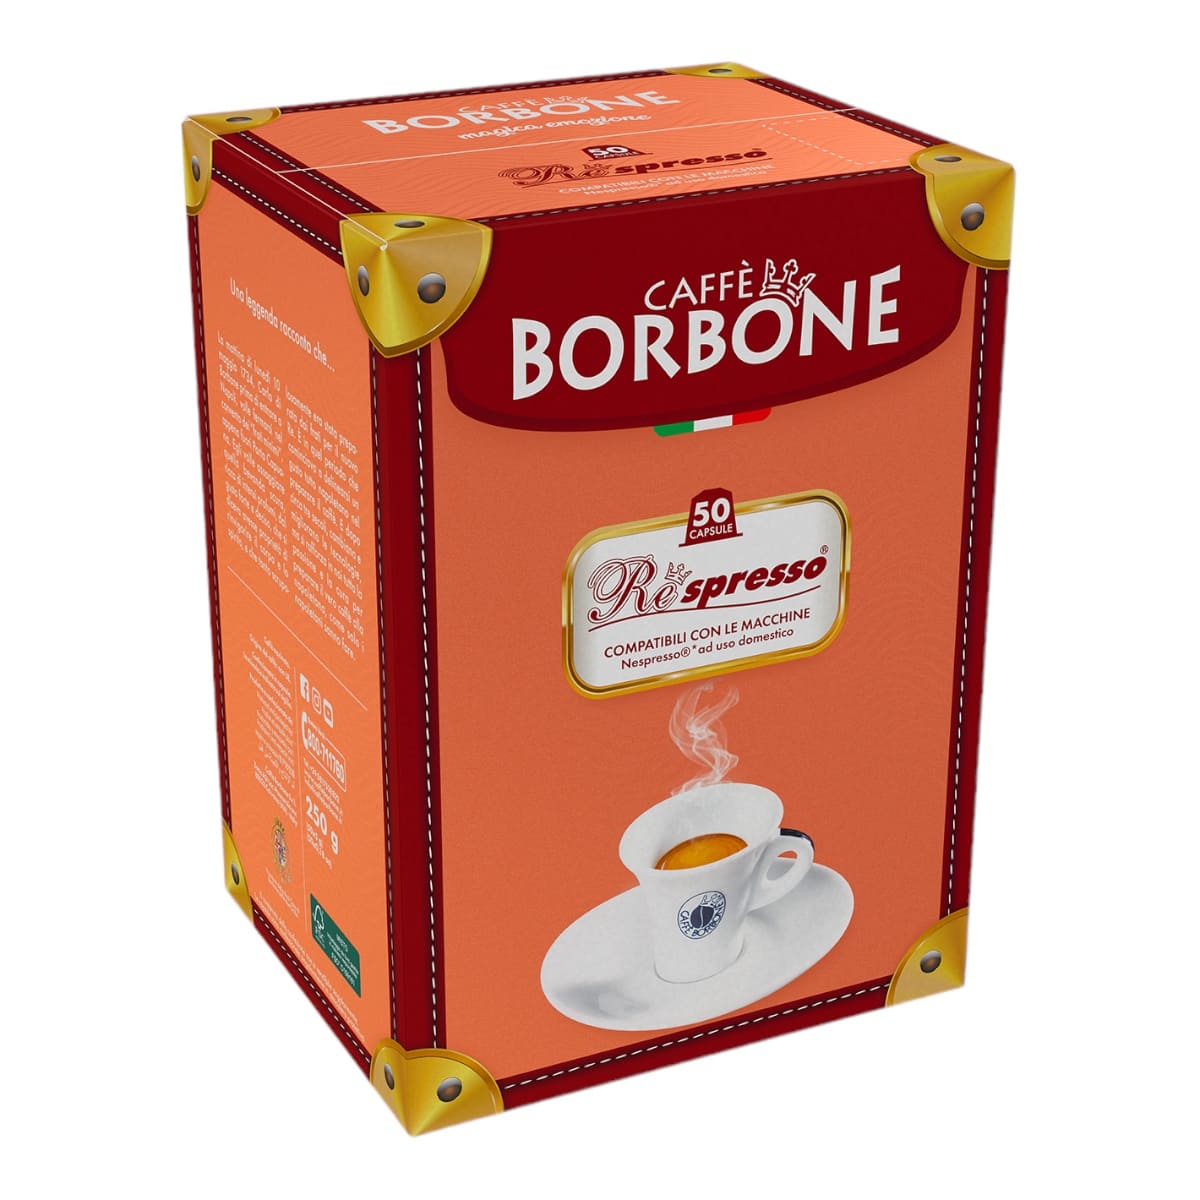 Caffè Borbone Respresso Kapseln Nera 50x5g